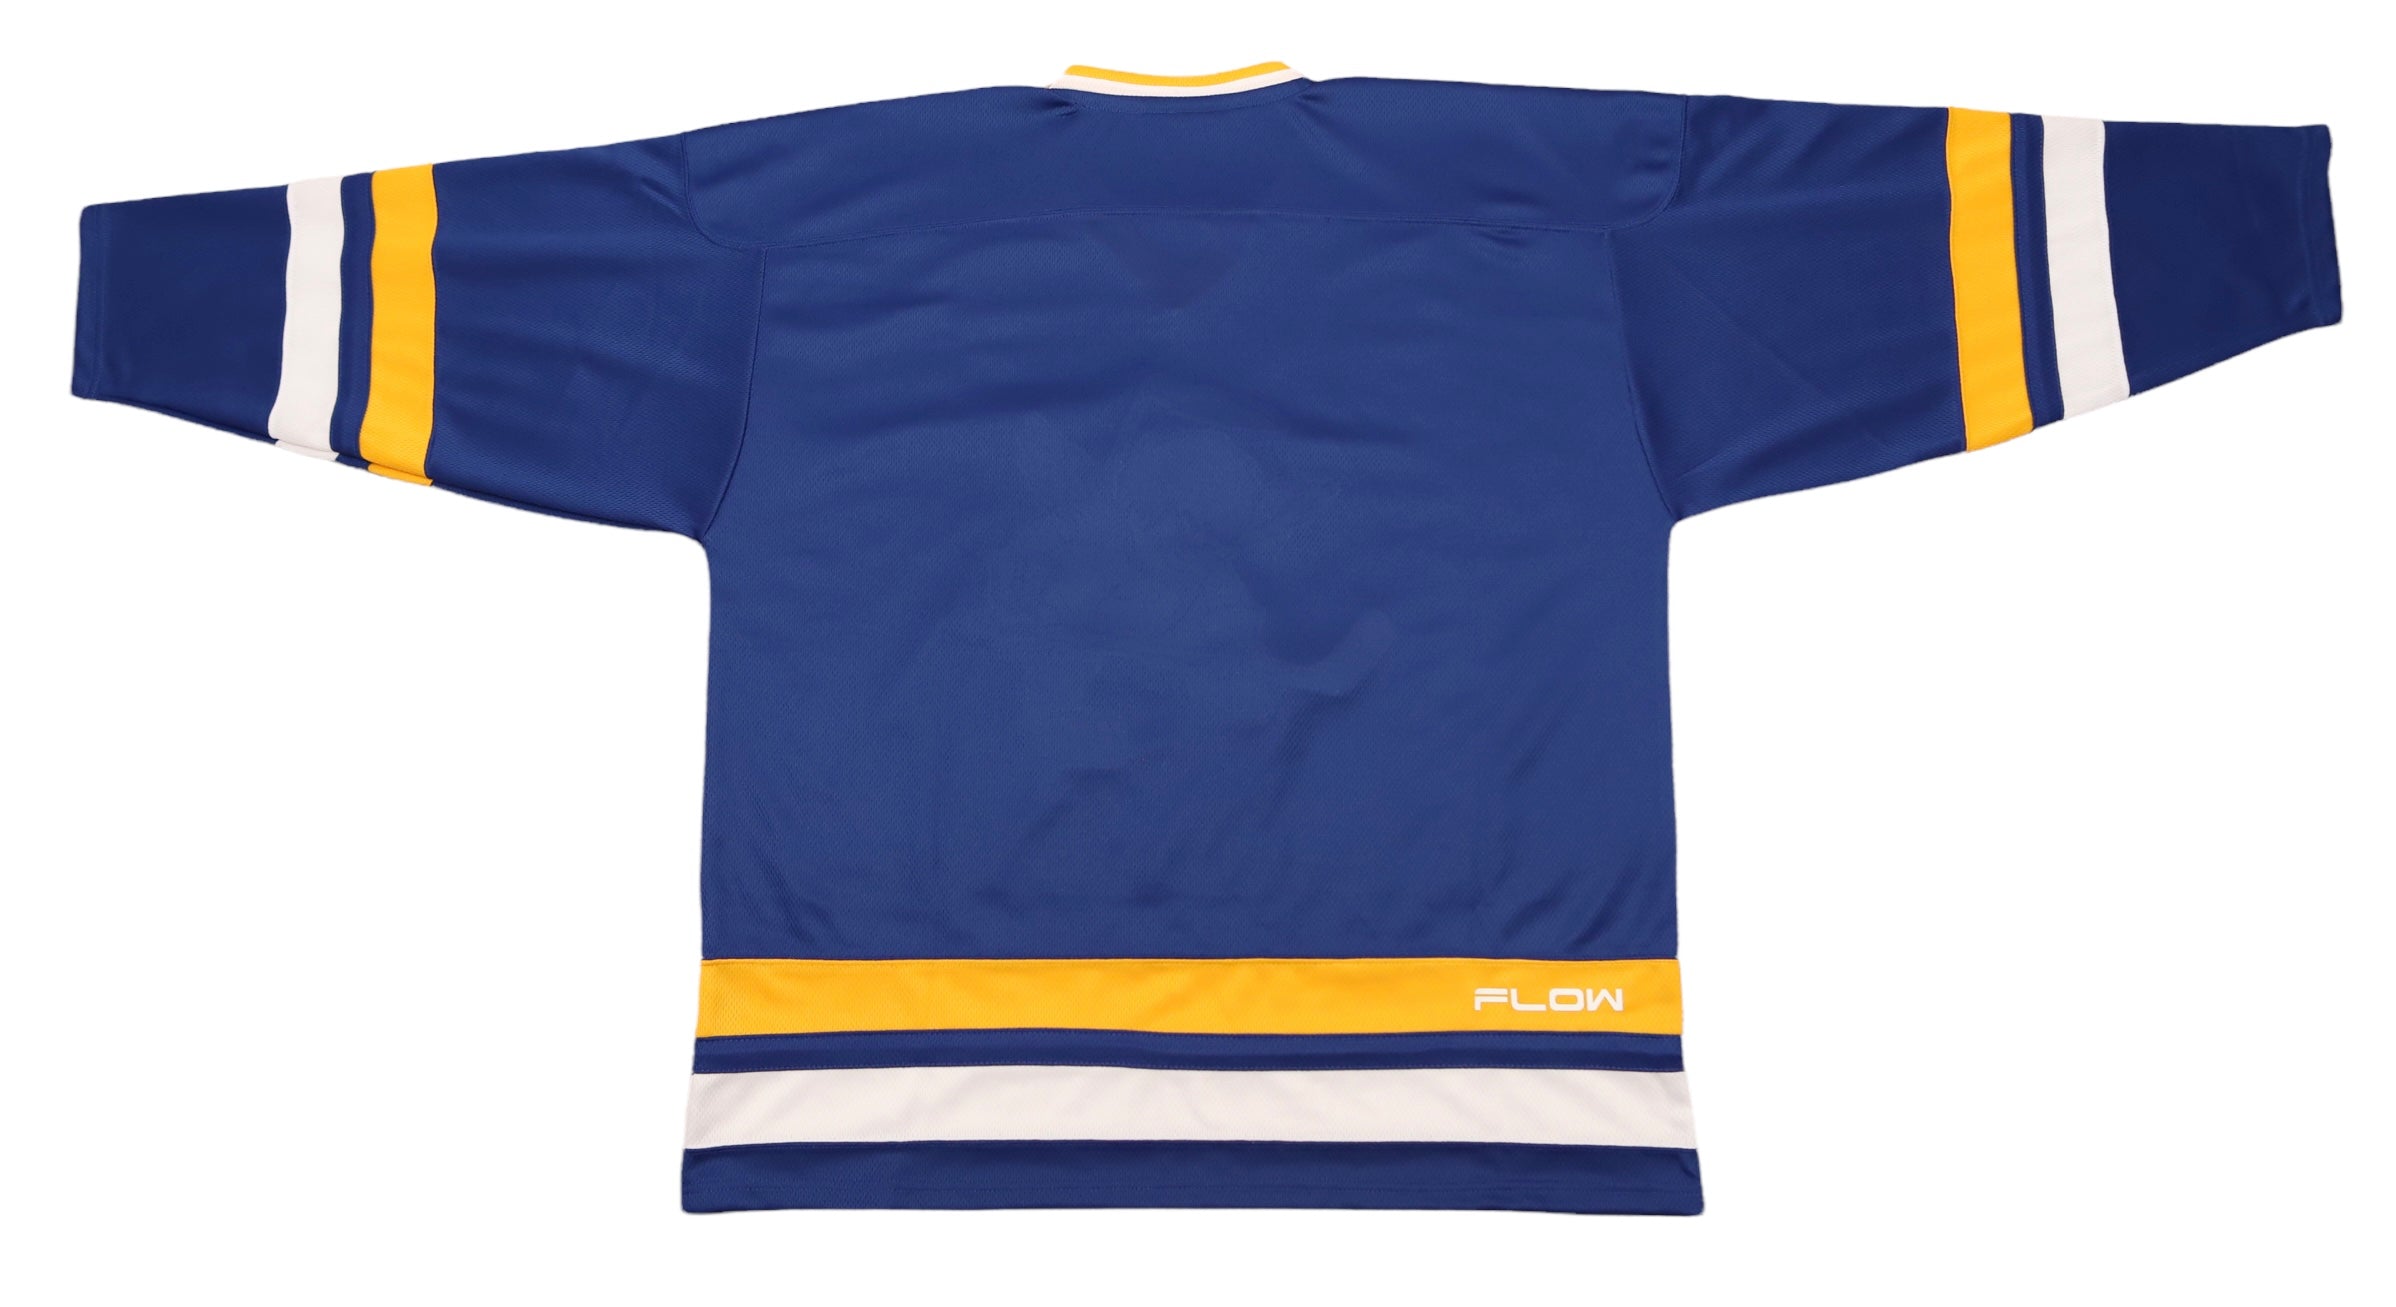 Gildan Saint Louis Football Club T-Shirt Navy L